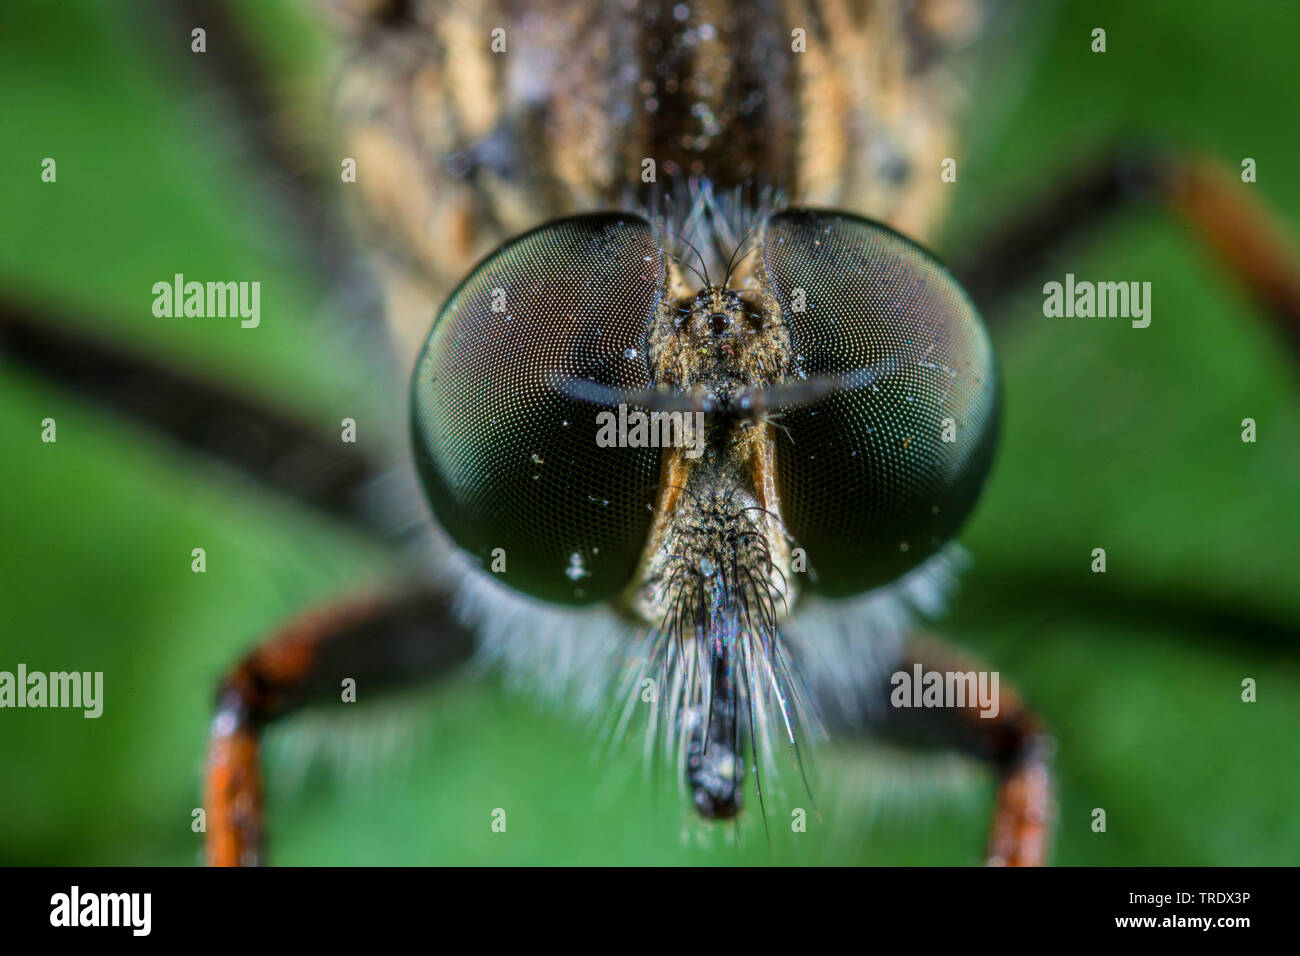 common awl robberfly (Neoitamus cyanurus), portrait, Germany Stock Photo